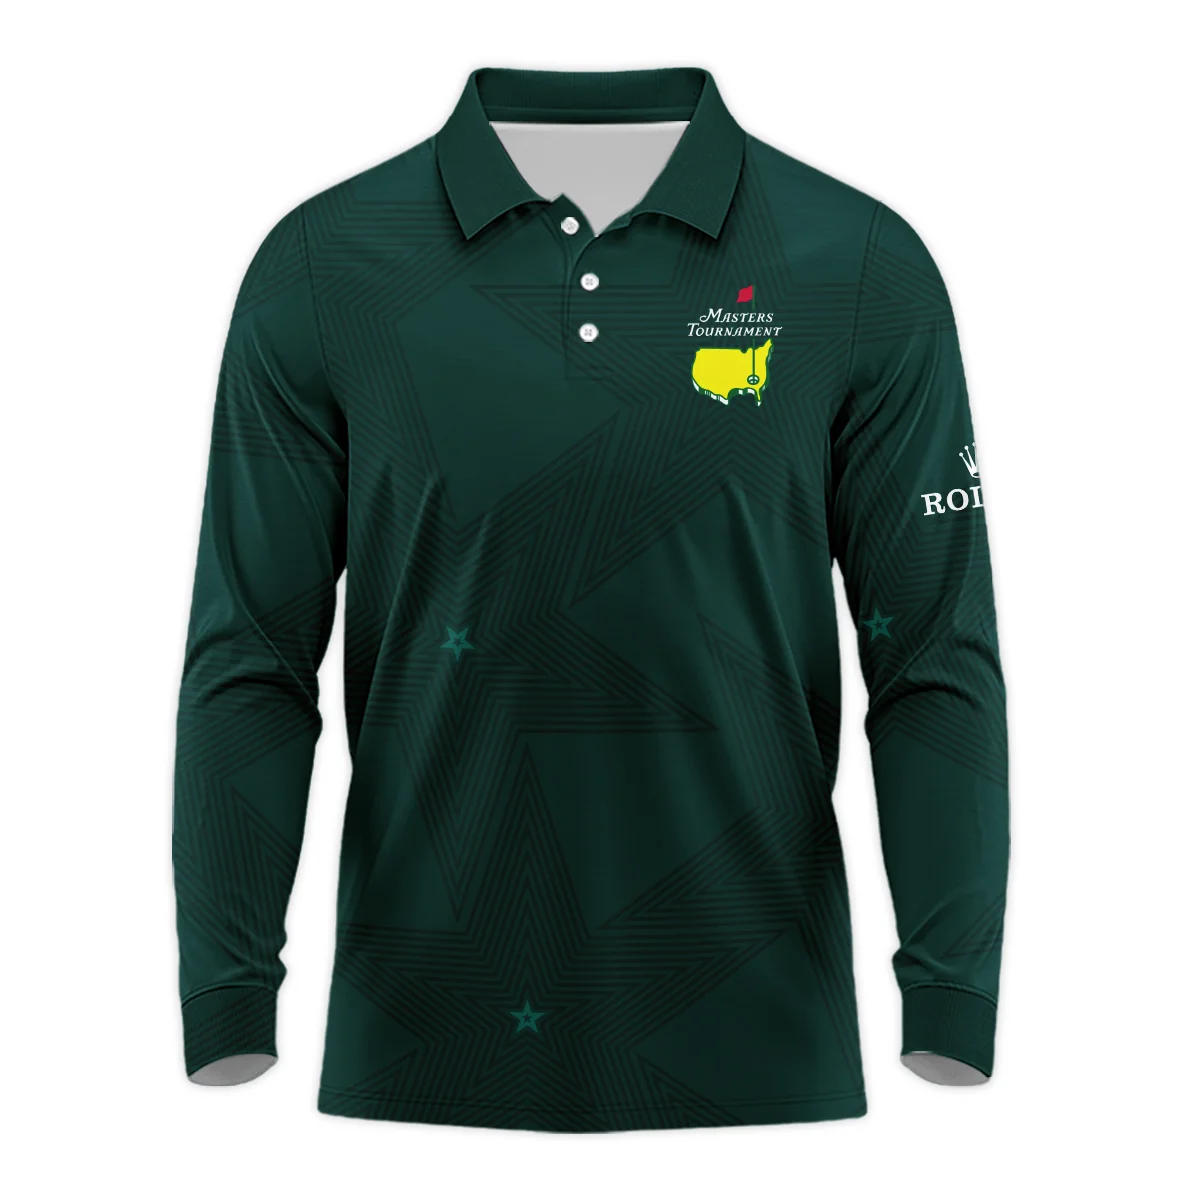 Stars Dark Green Golf Masters Tournament Rolex Quarter-Zip Jacket Style Classic Quarter-Zip Jacket